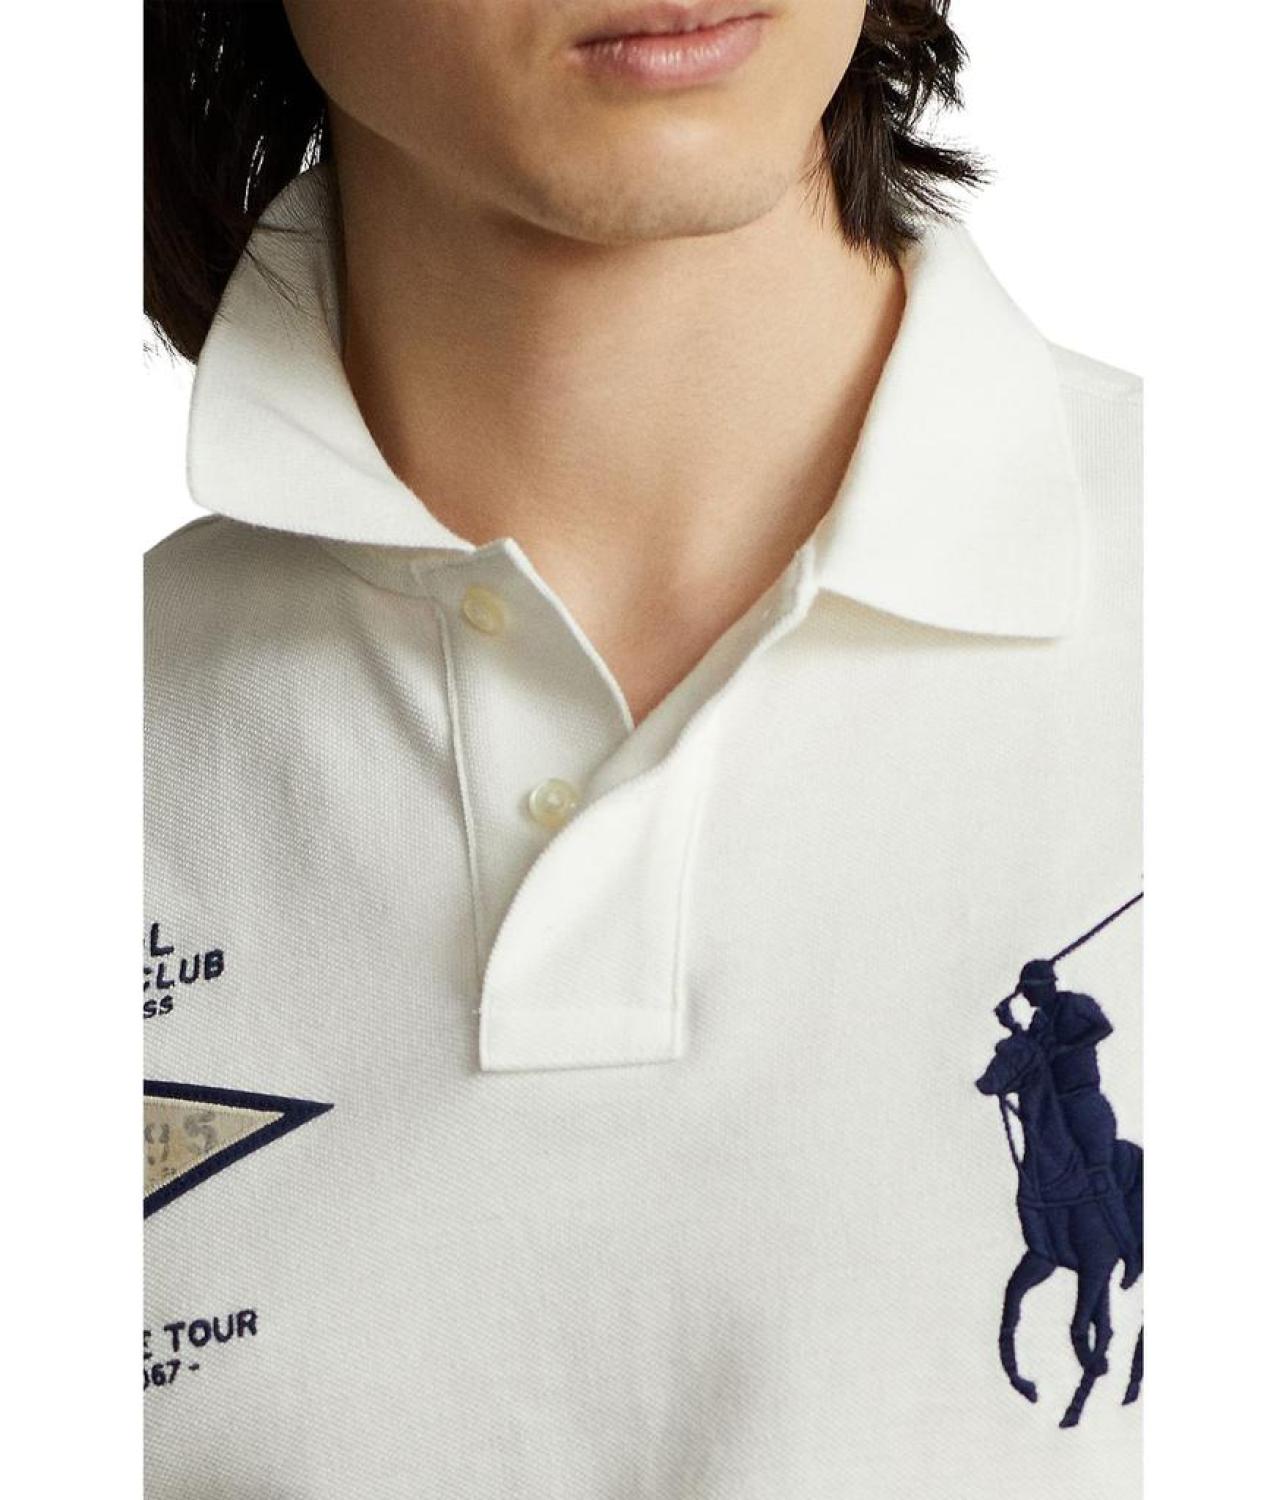 Men Polo Ralph Lauren BIG PONY Mesh Polo Shirt - S M L XL XXL - CLASSIC FIT